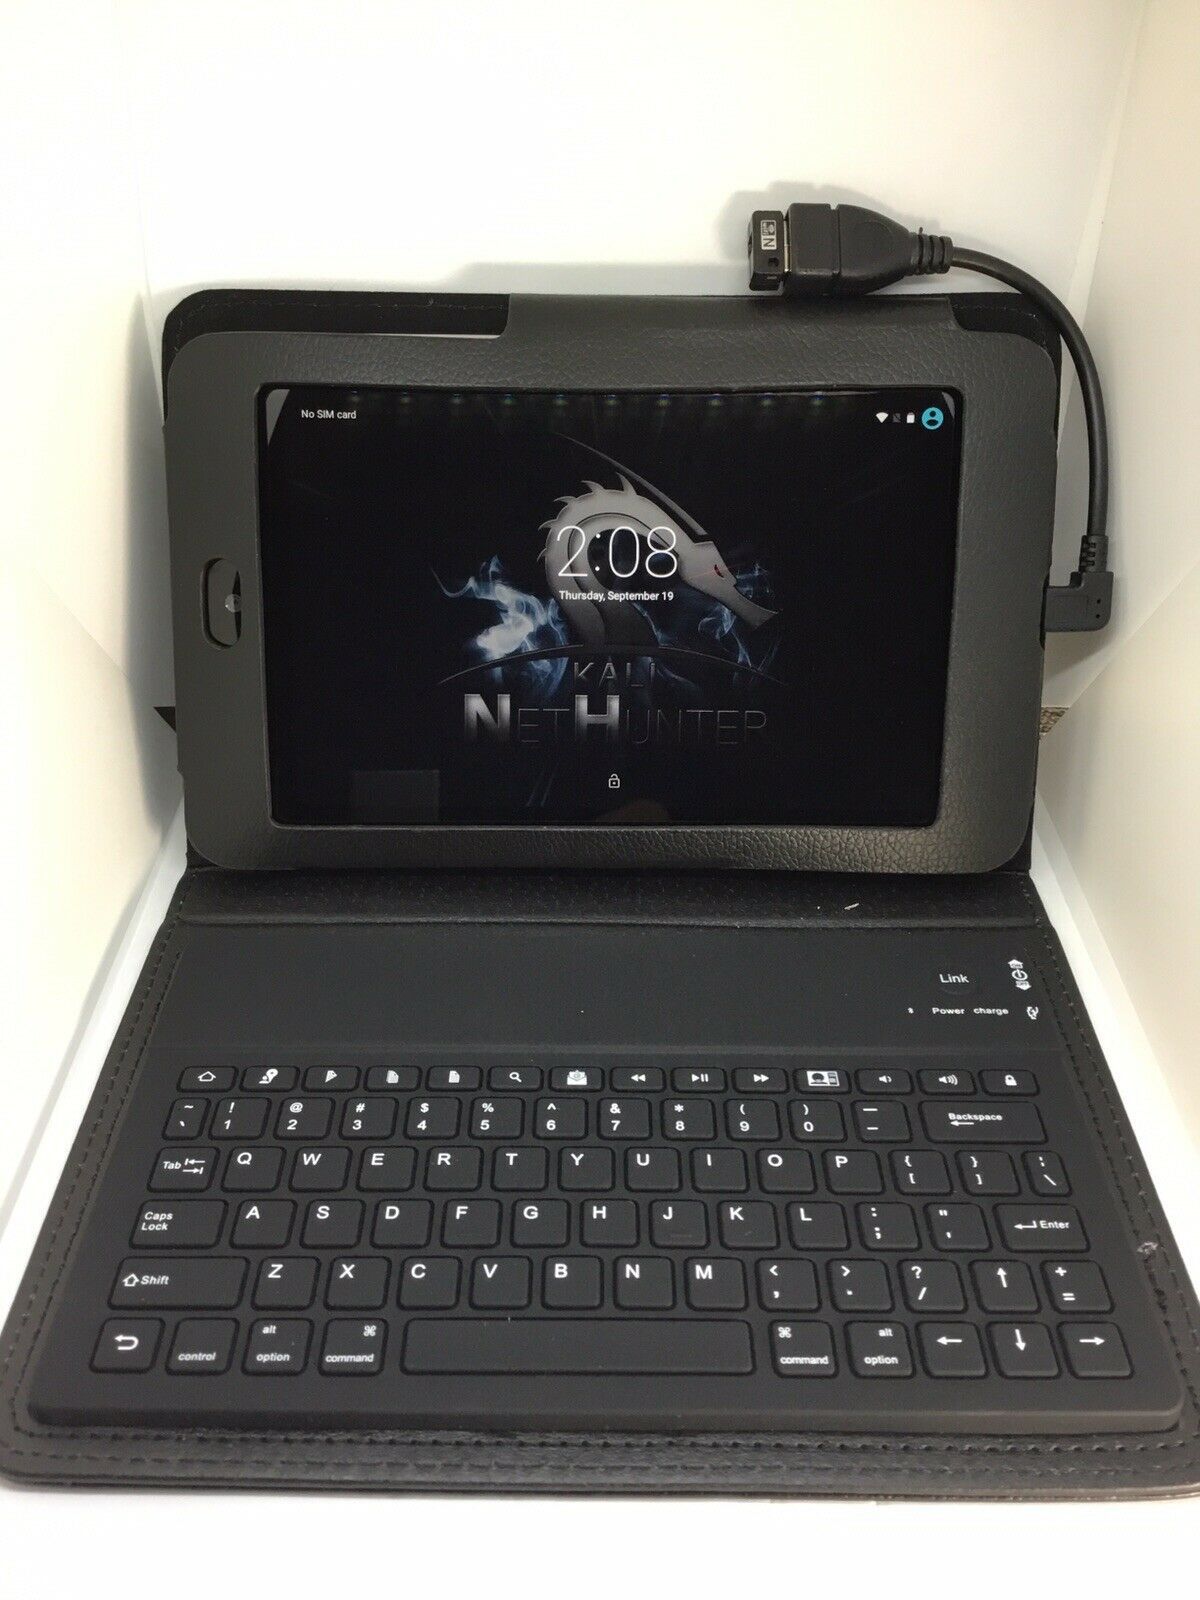 Nexus 7 Pwn Pad Kali Linux Nethunter Wifi Hack Security Penetration Tablet Kit Mr Robot